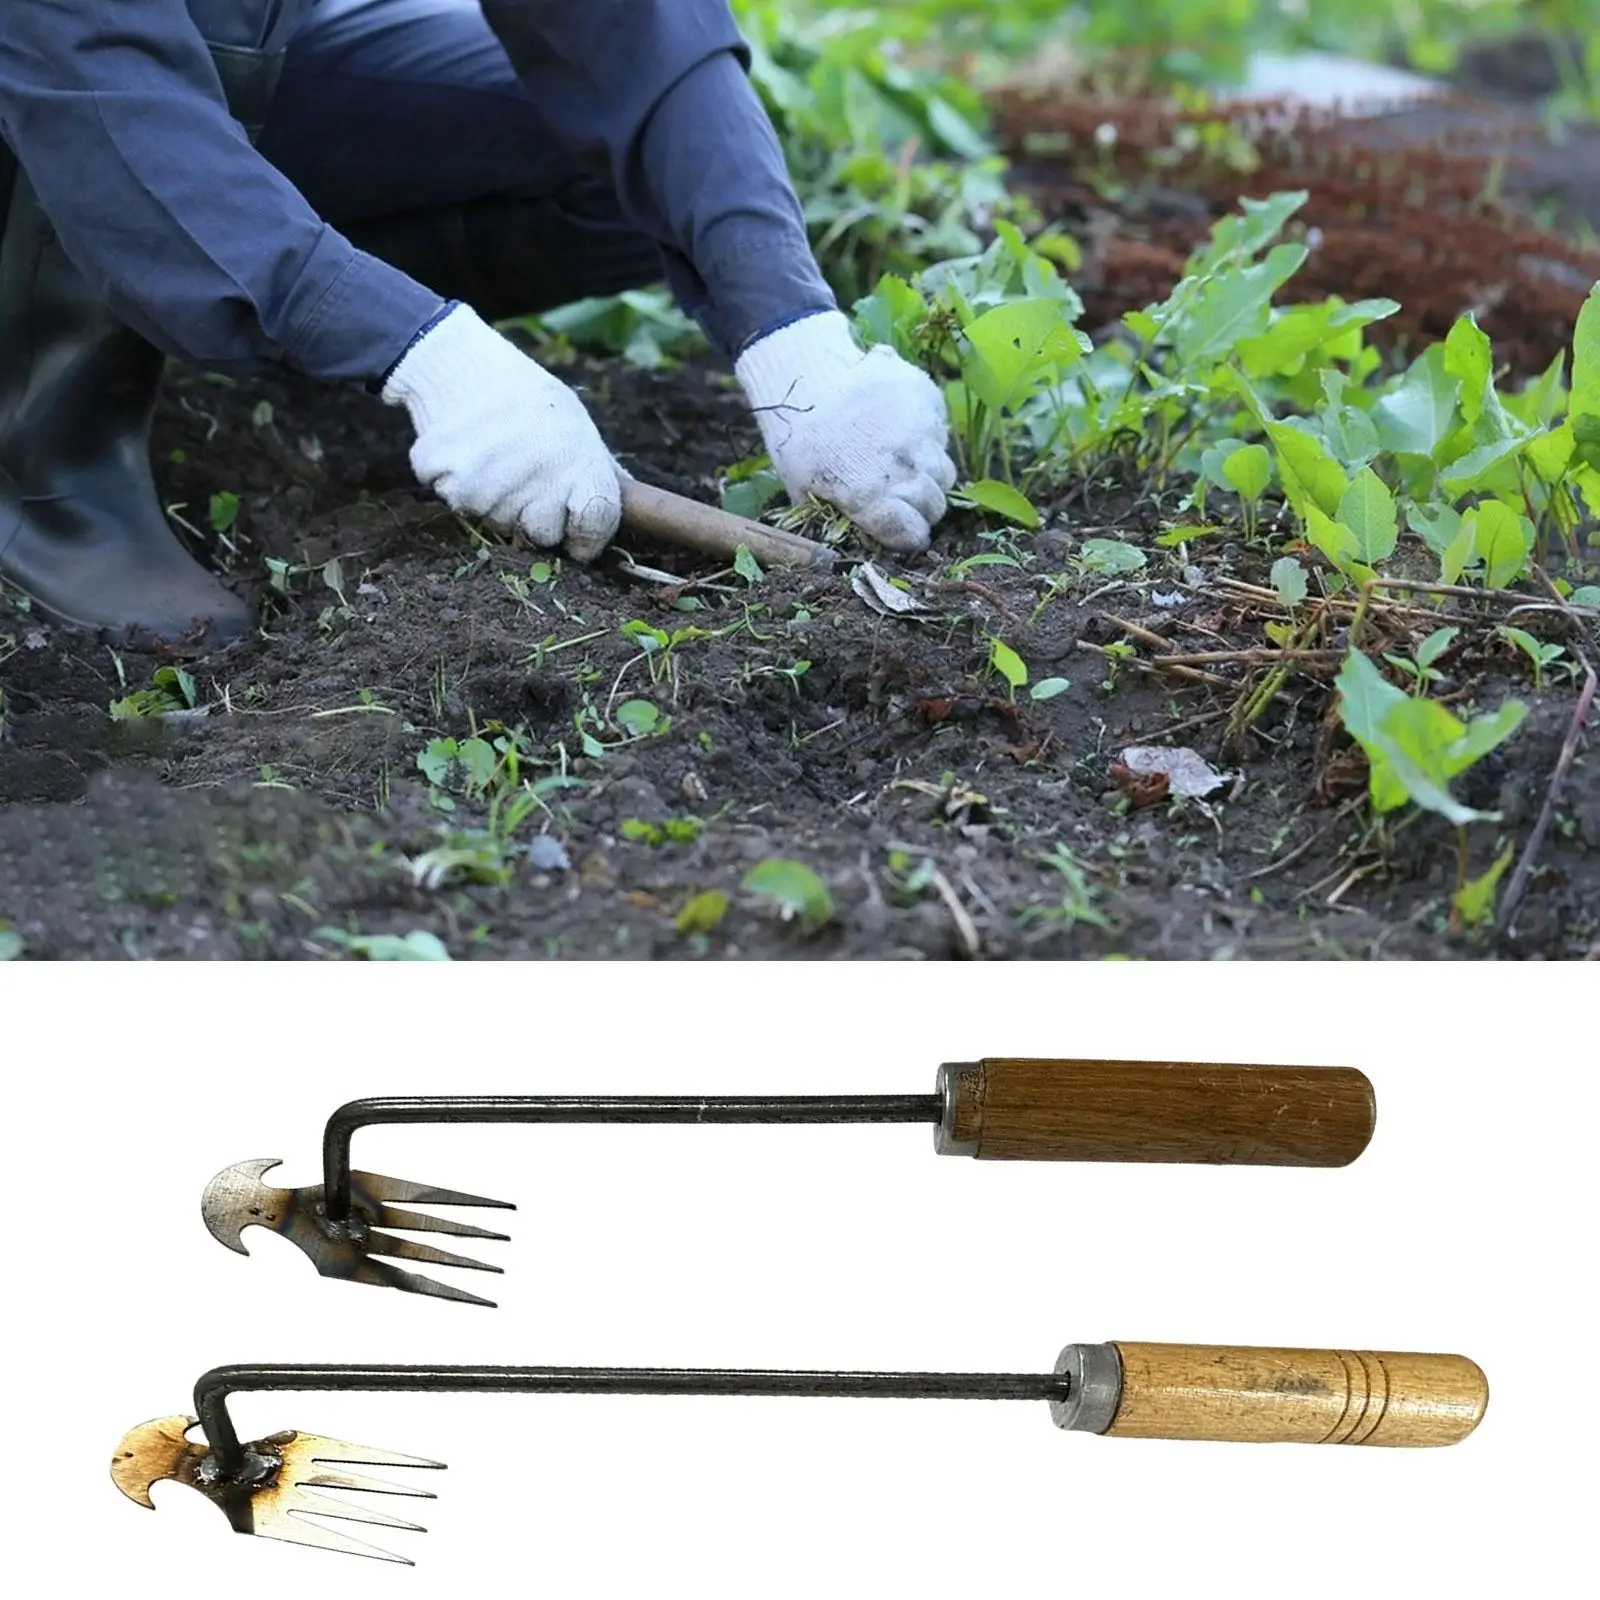 Garden Weeder Hand Tool, Stand up Weeder Puller Tool, Hand Cultivator Rake Hoe Tiller Tool for Gardening